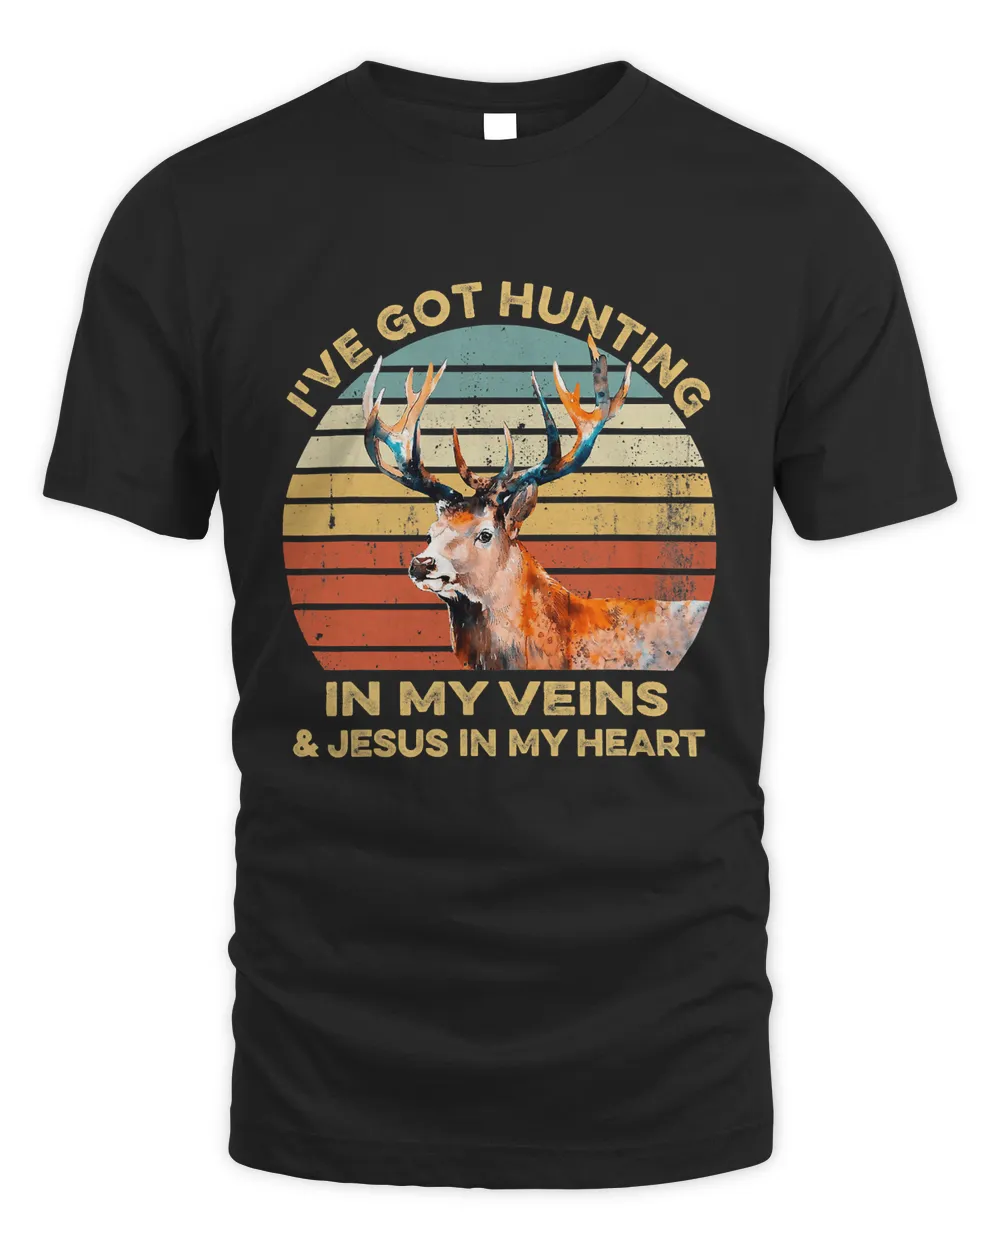 Ive Got Hunting In My Veins Jesus In My Heart 196